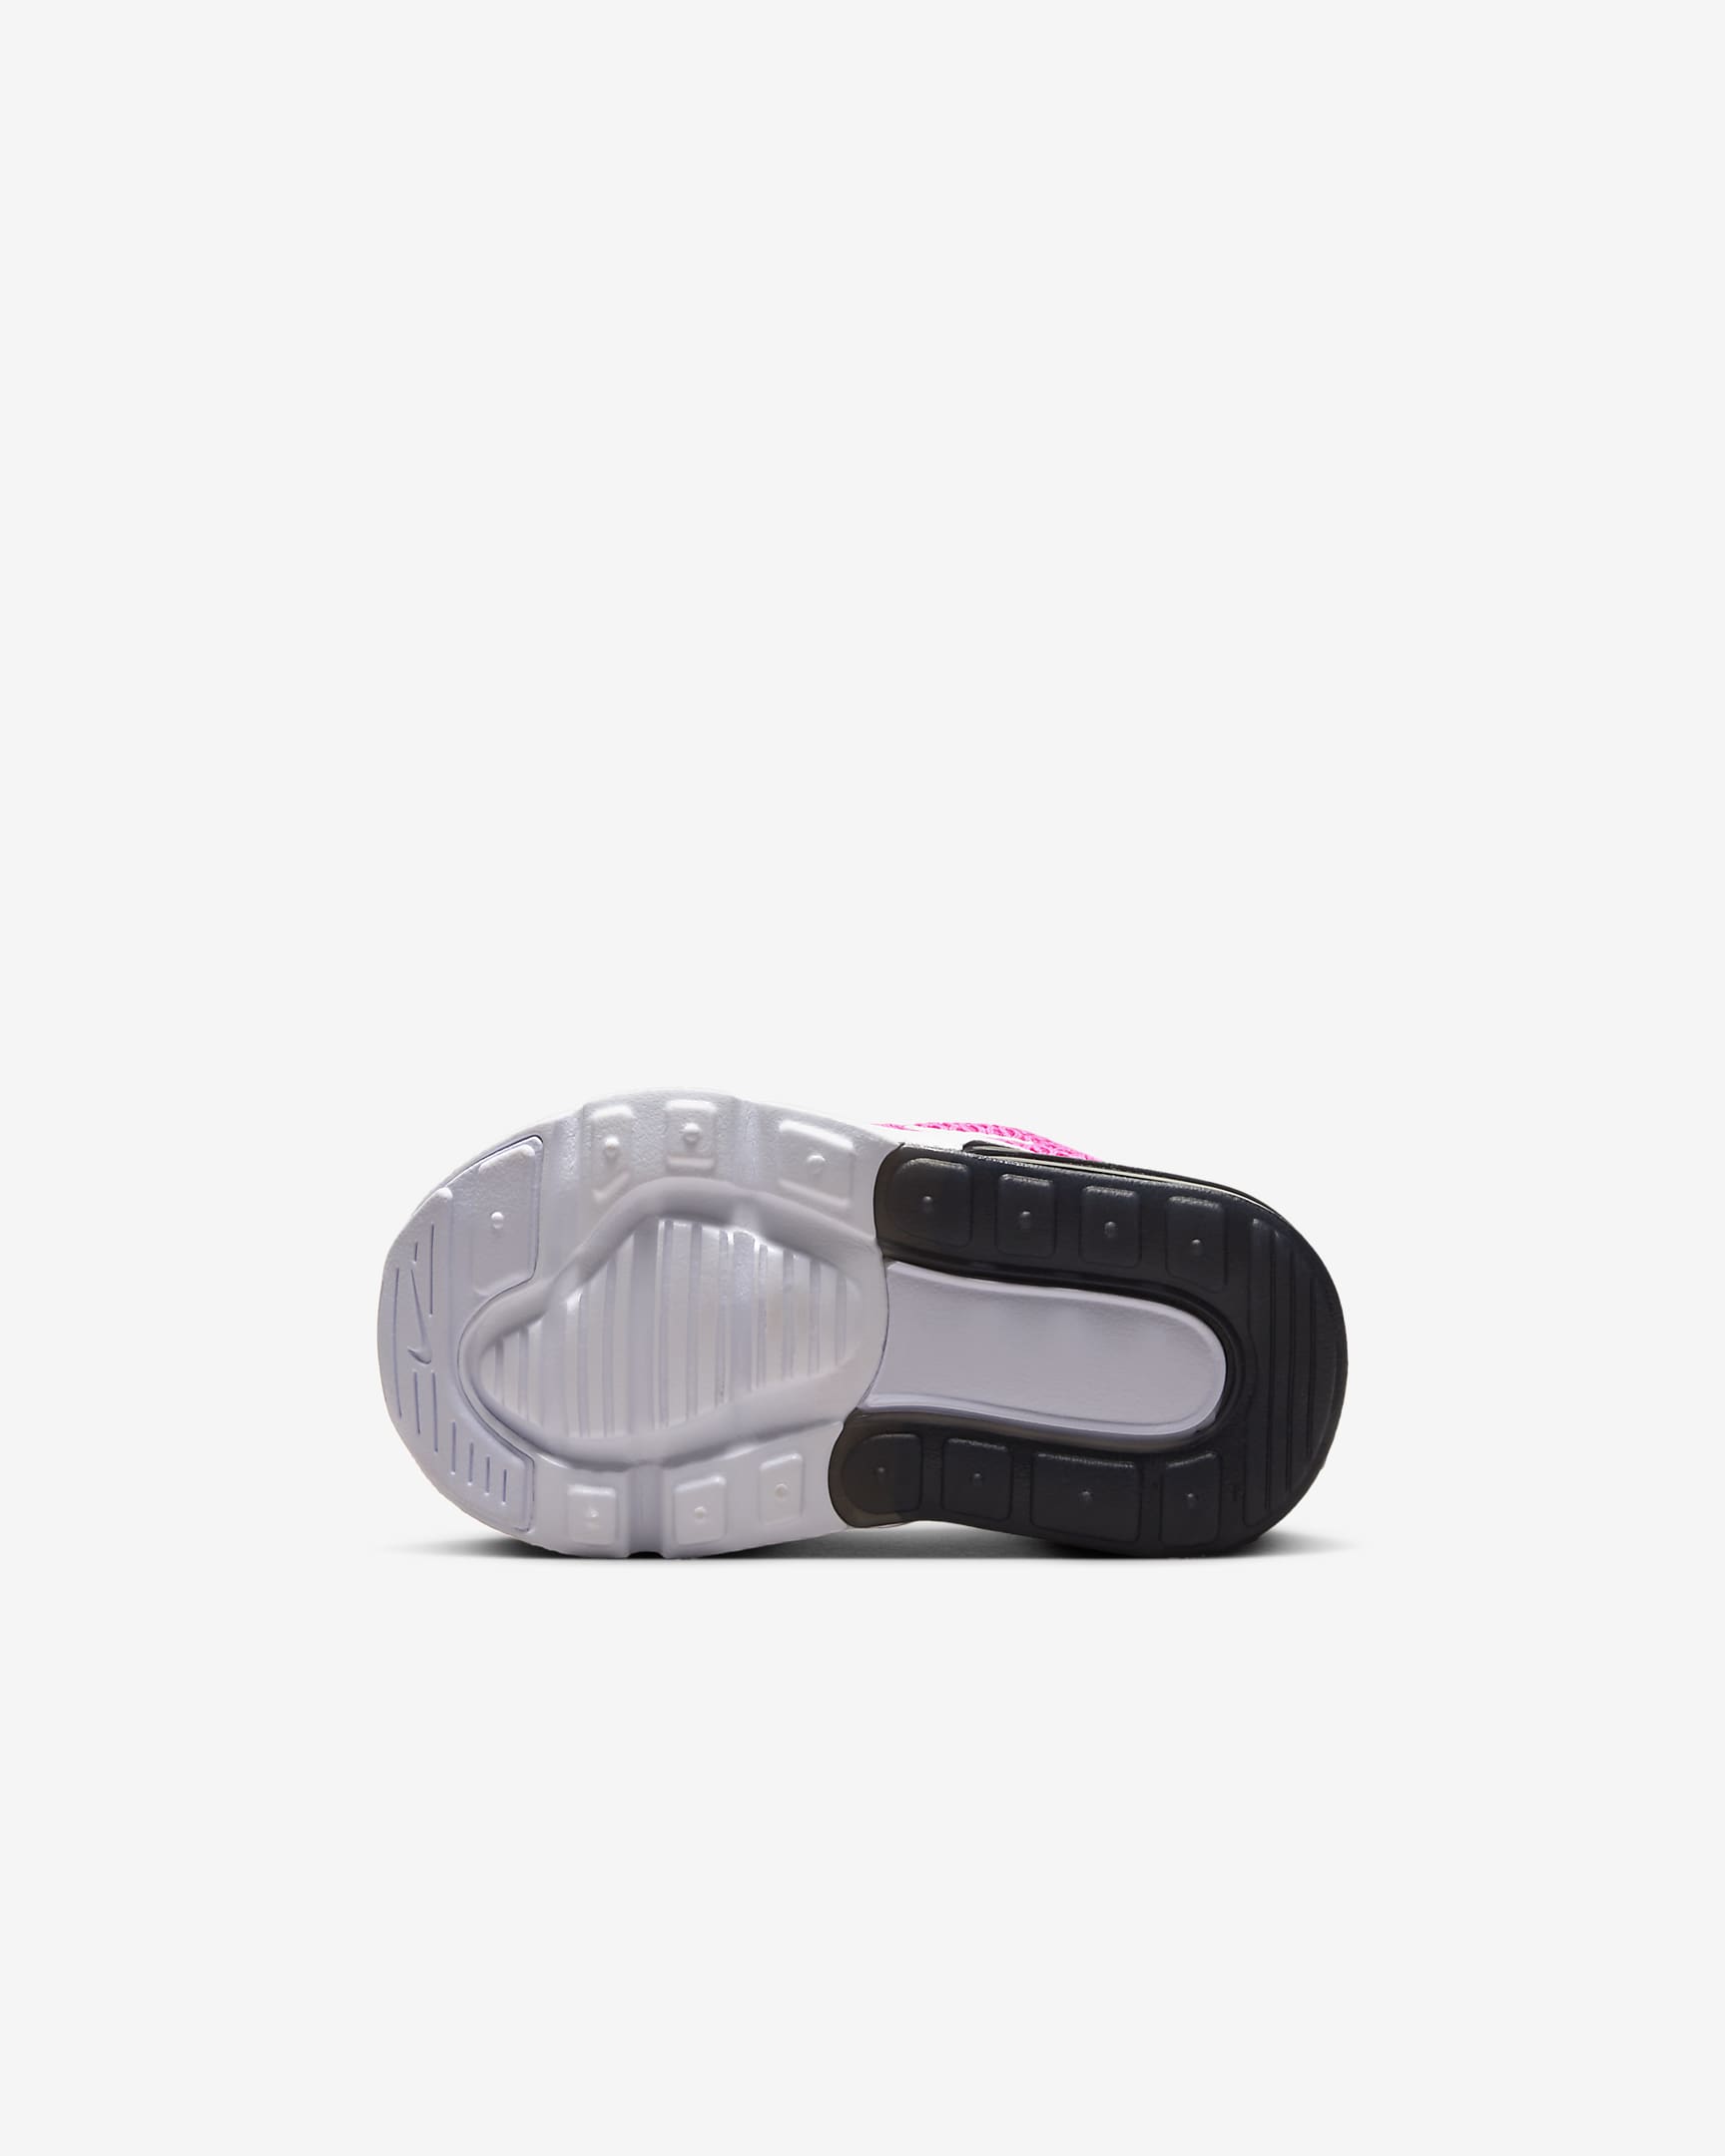 Nike Air Max 270 Baby/Toddler Shoe - Laser Fuchsia/Black/White/Summit White